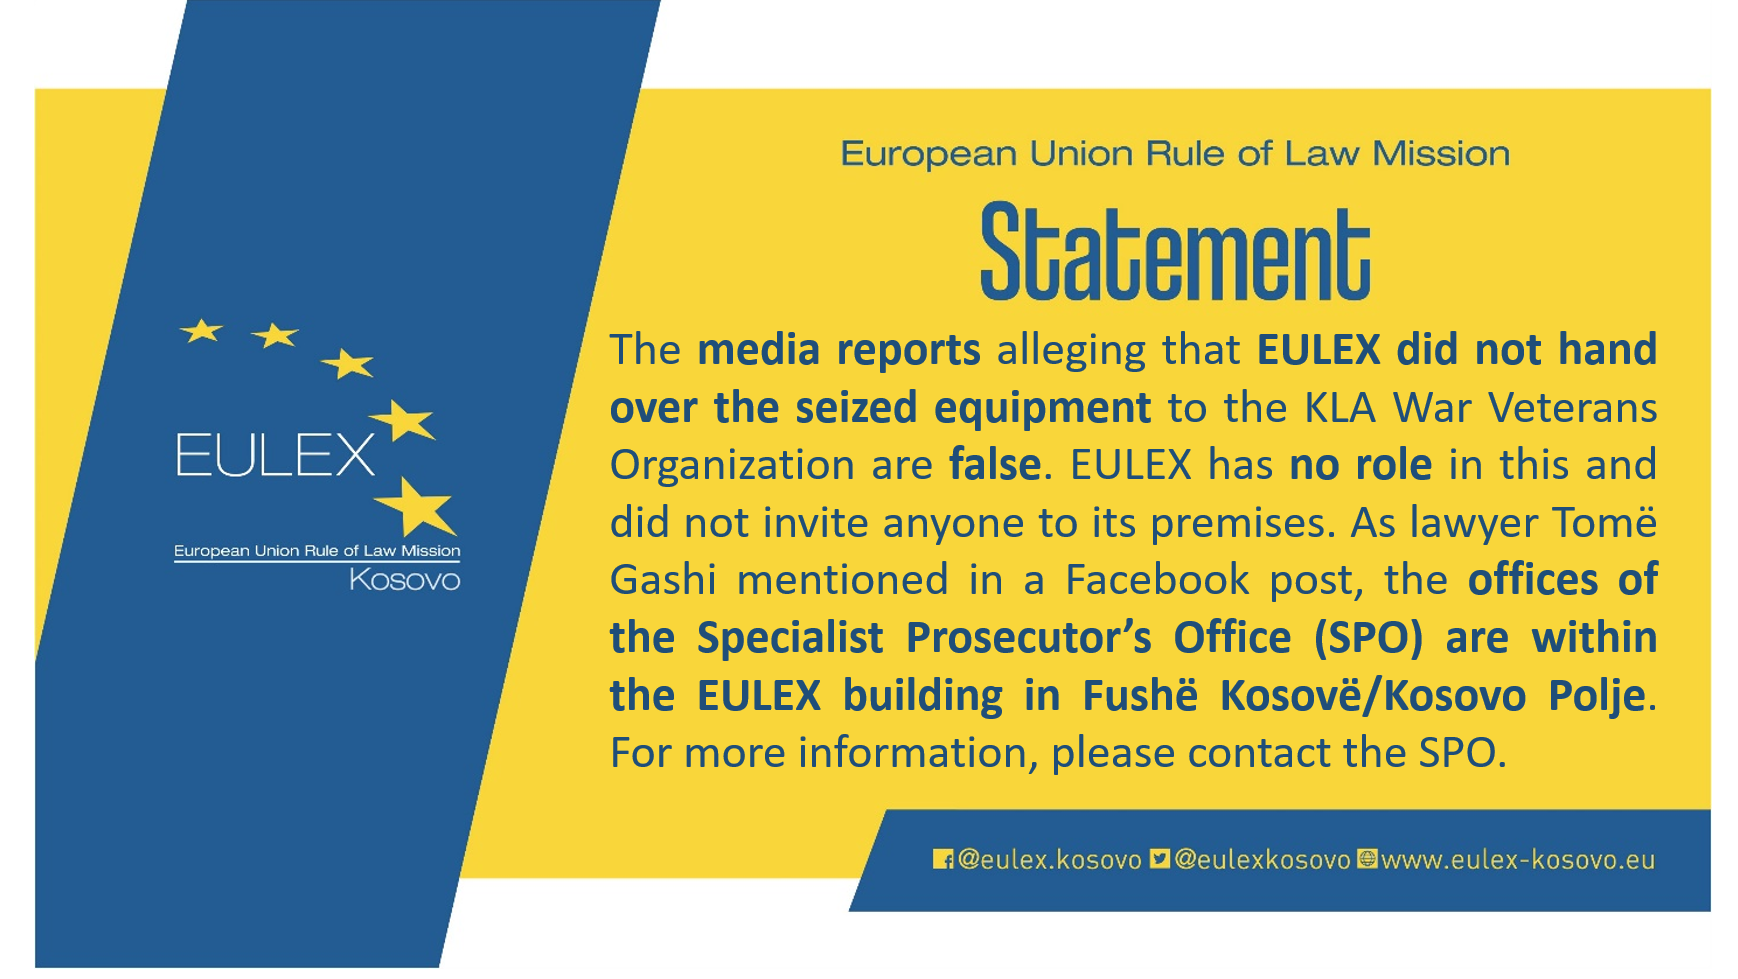 EULEX rebuttal to incorrect media reports